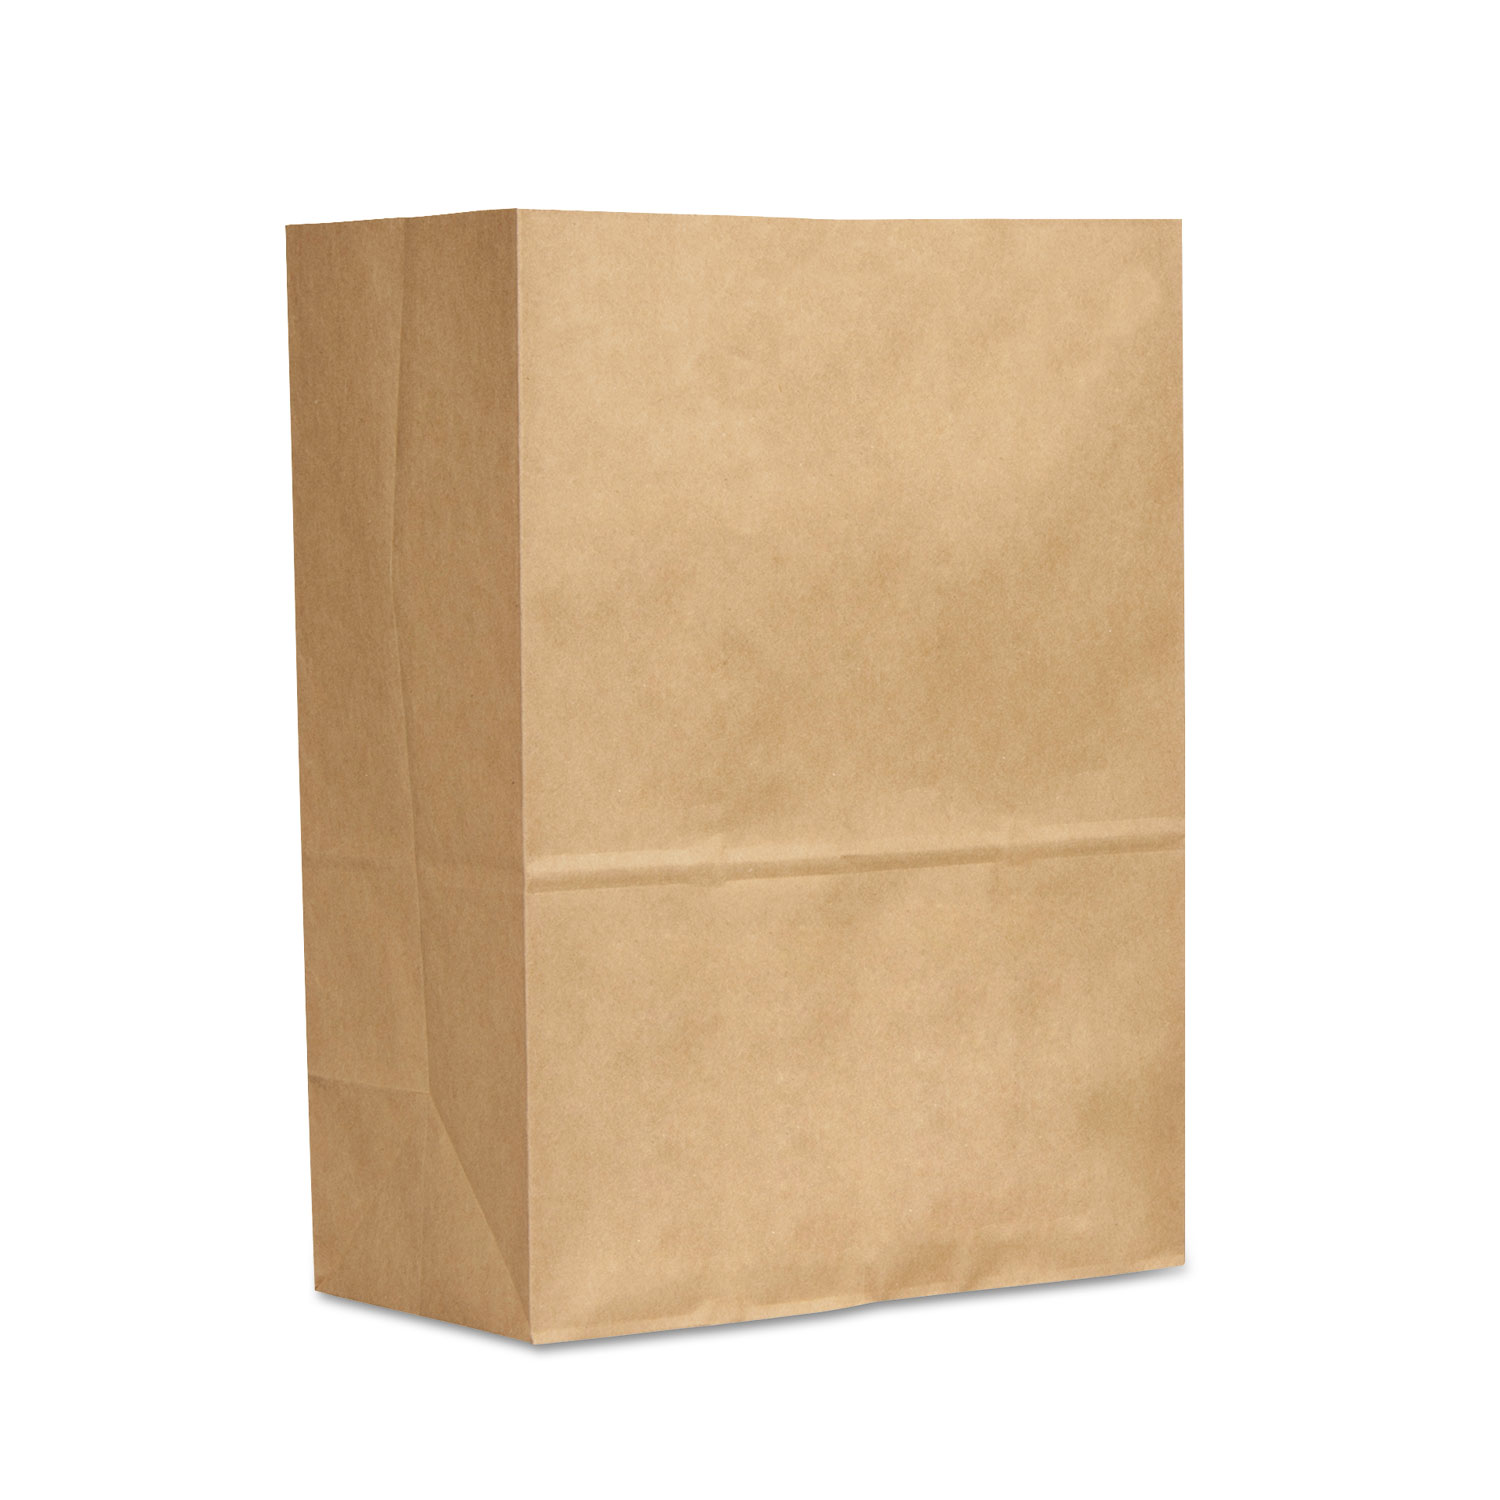  General 88885 Grocery Paper Bags, 70 lbs Capacity, 1/6 BBL, 12w x 7d x 17h, Kraft, 300 Bags (BAGSK1670EZ300) 